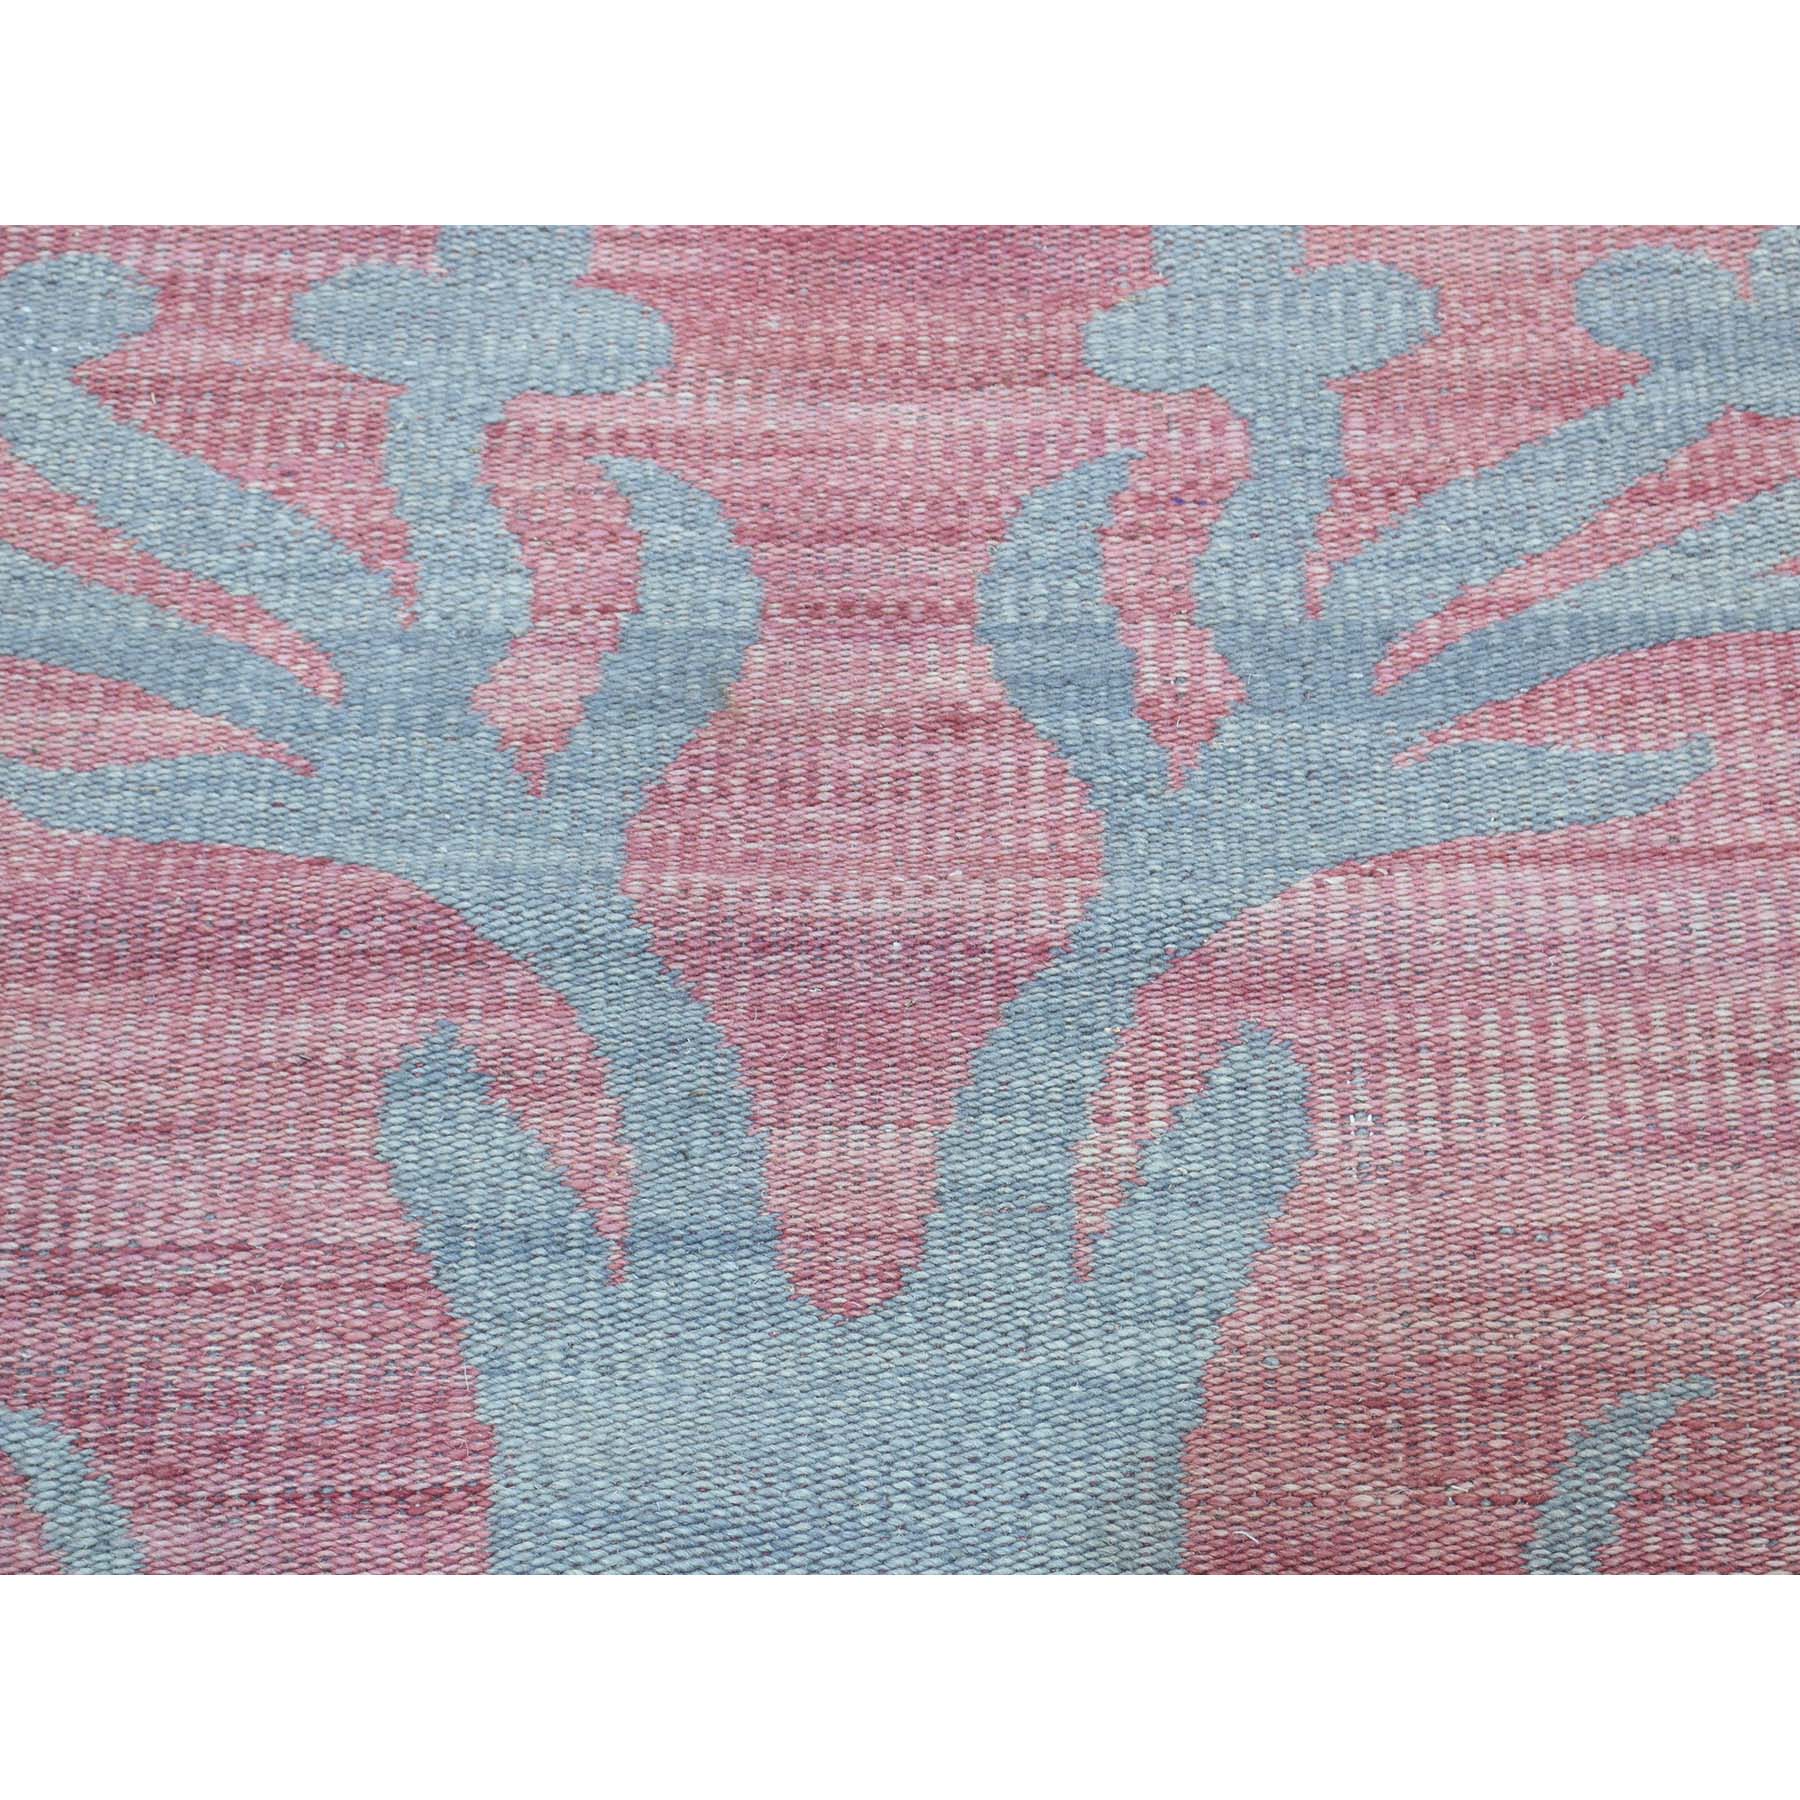 2-7 x8- Hand-Woven Durie Kilim Reversible Flat Weave Oriental Runner Rug 